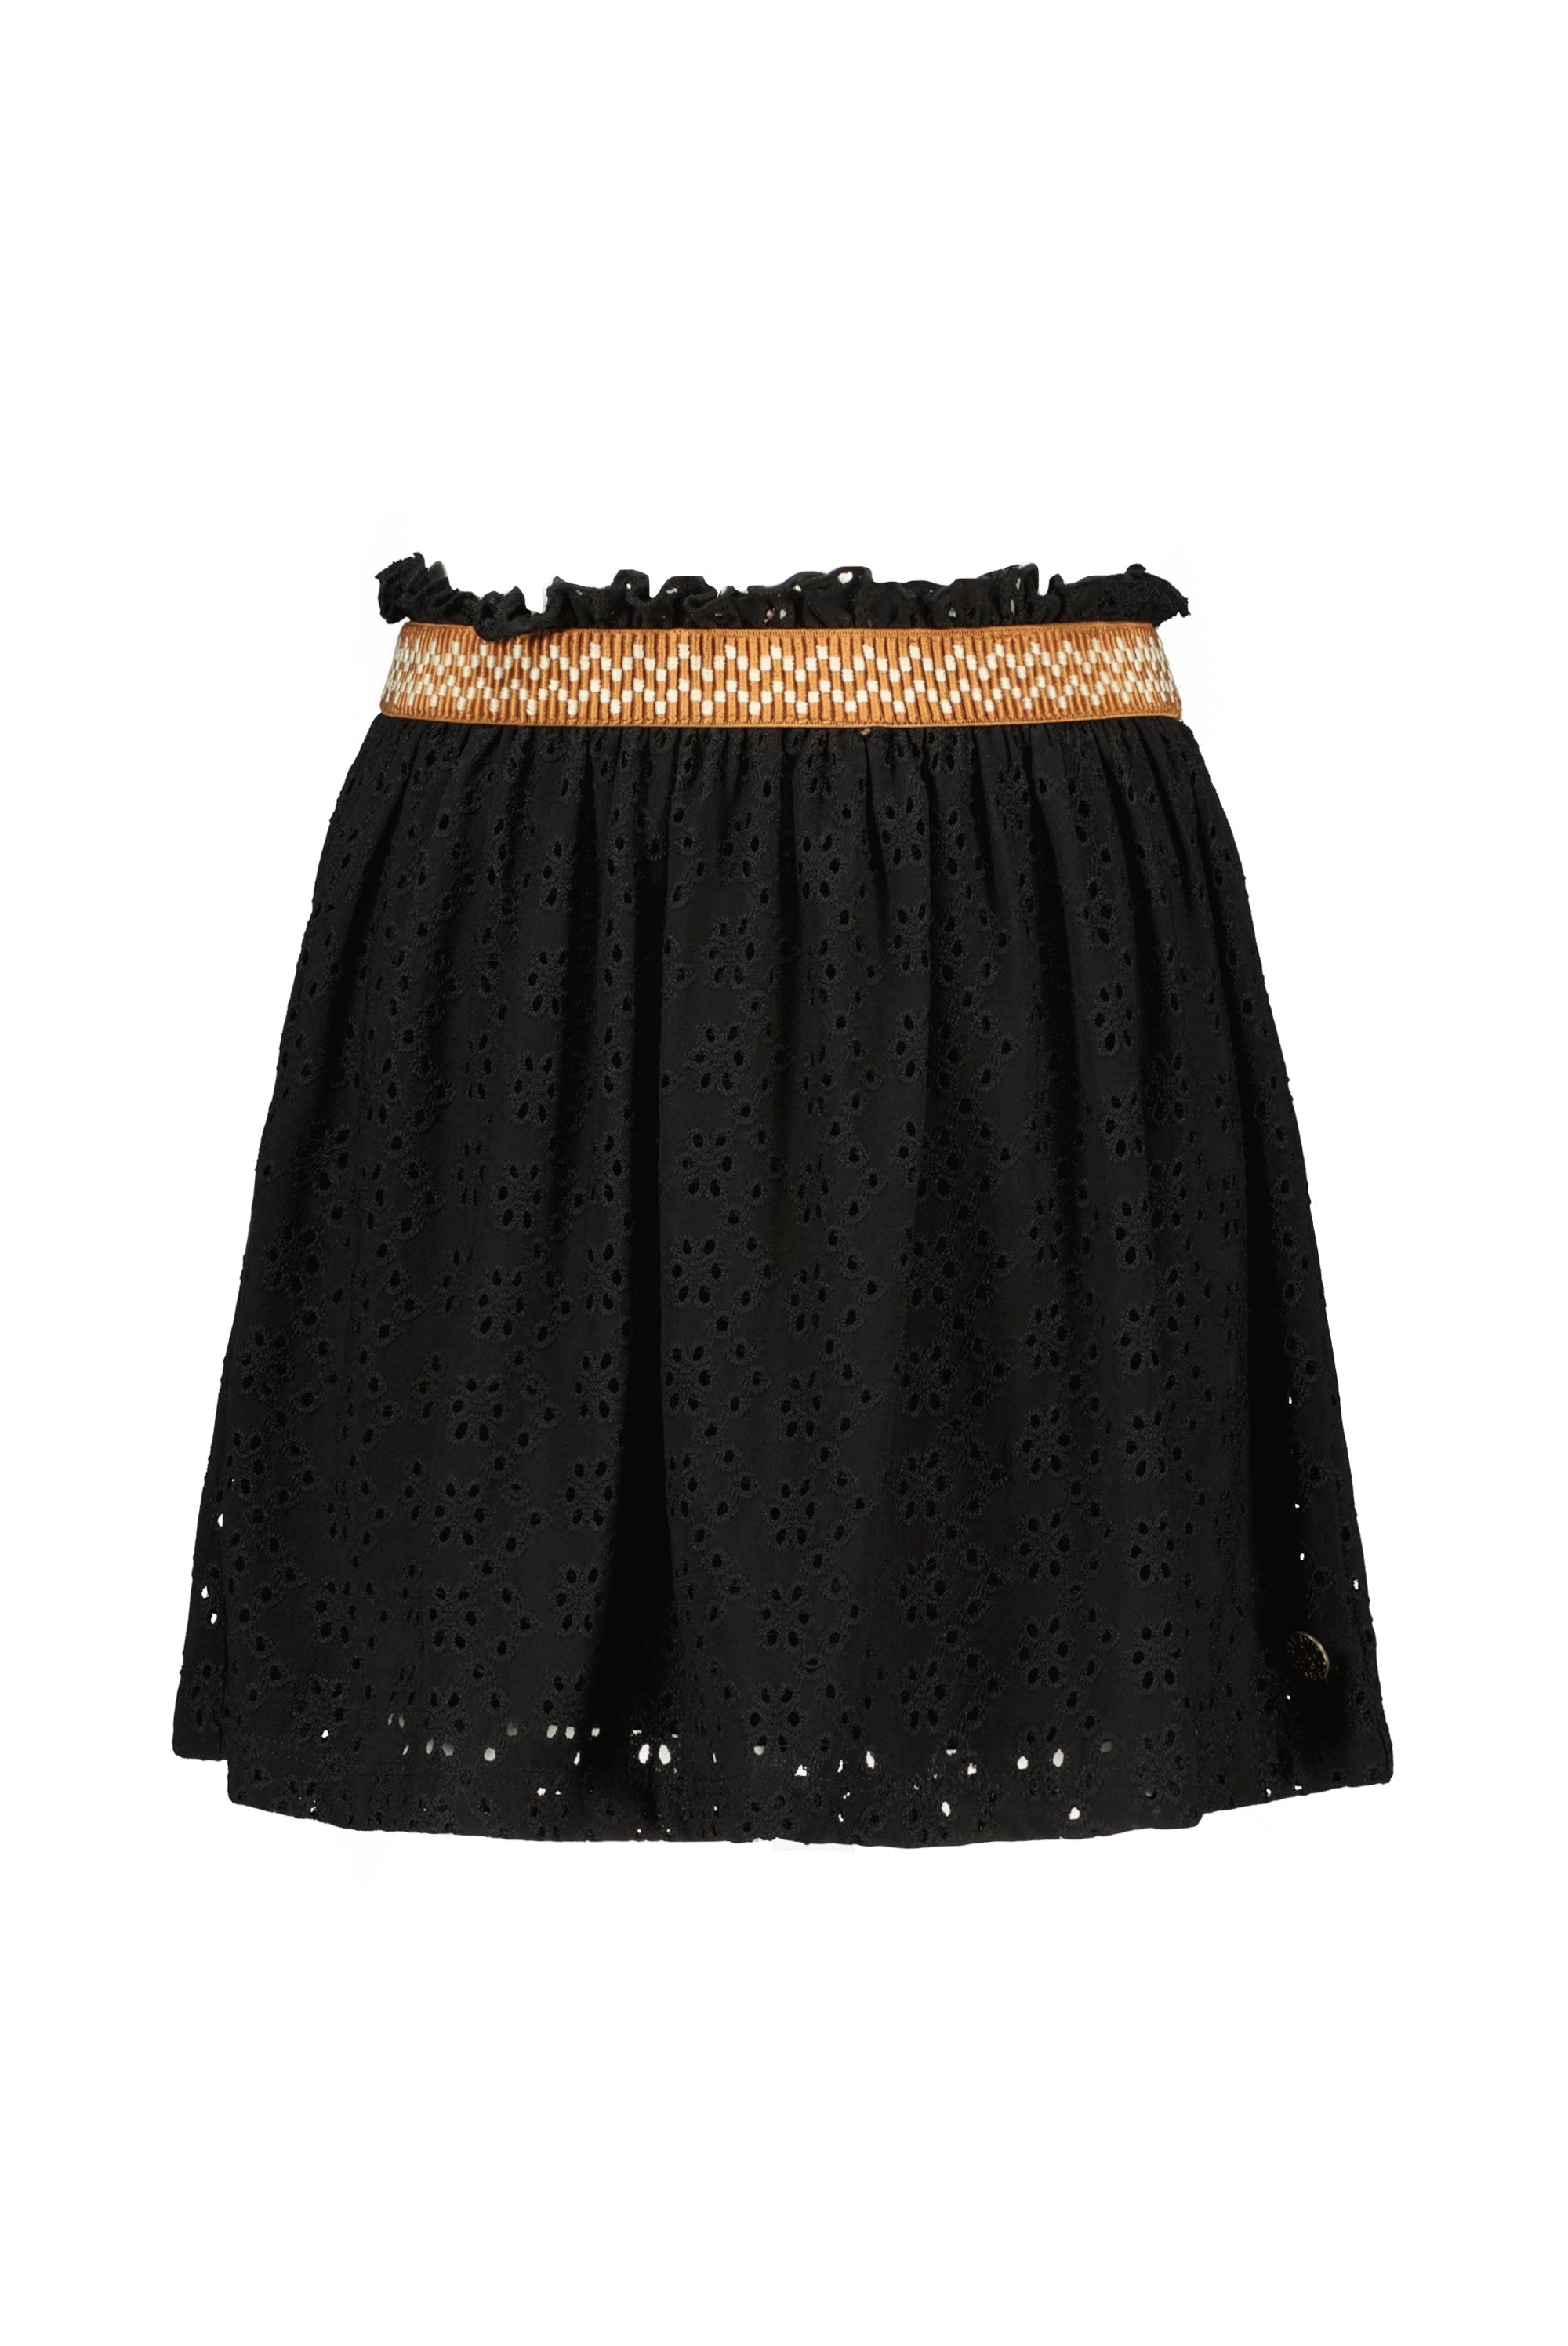 Meisjes Jersey Jacquard Skirt van Like Flo in de kleur Black in maat 152.